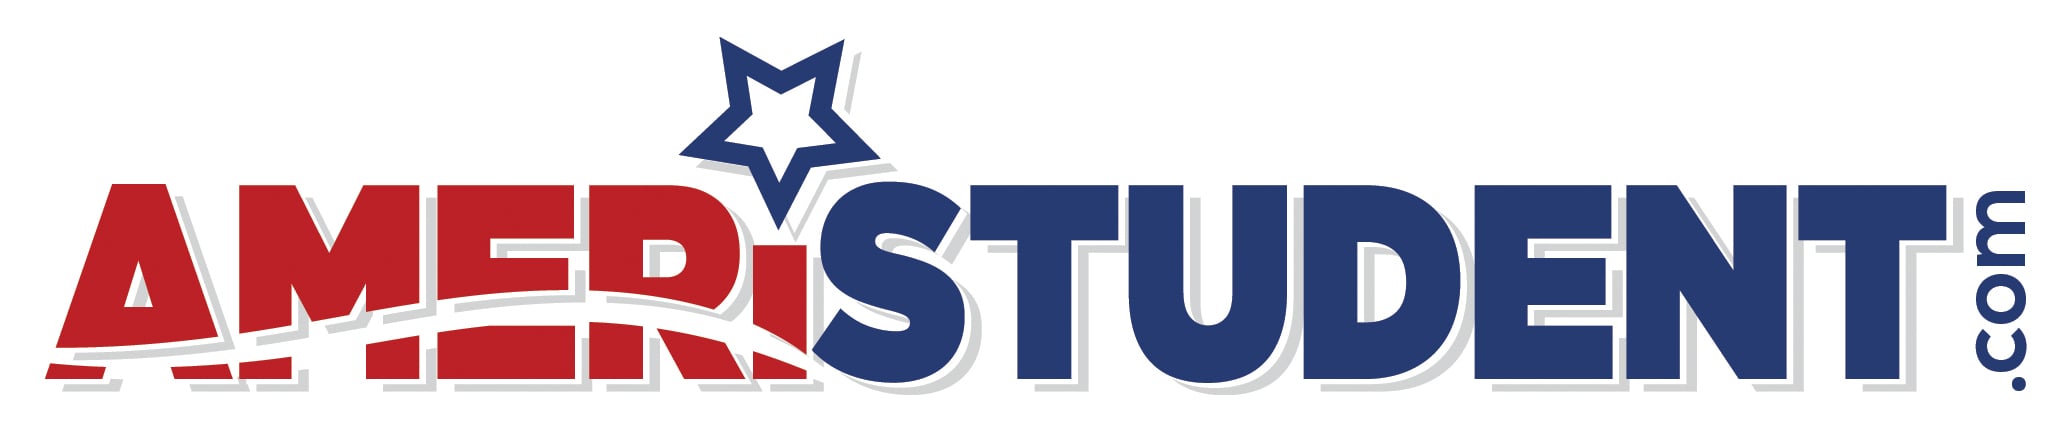 AmeriStudent Logo